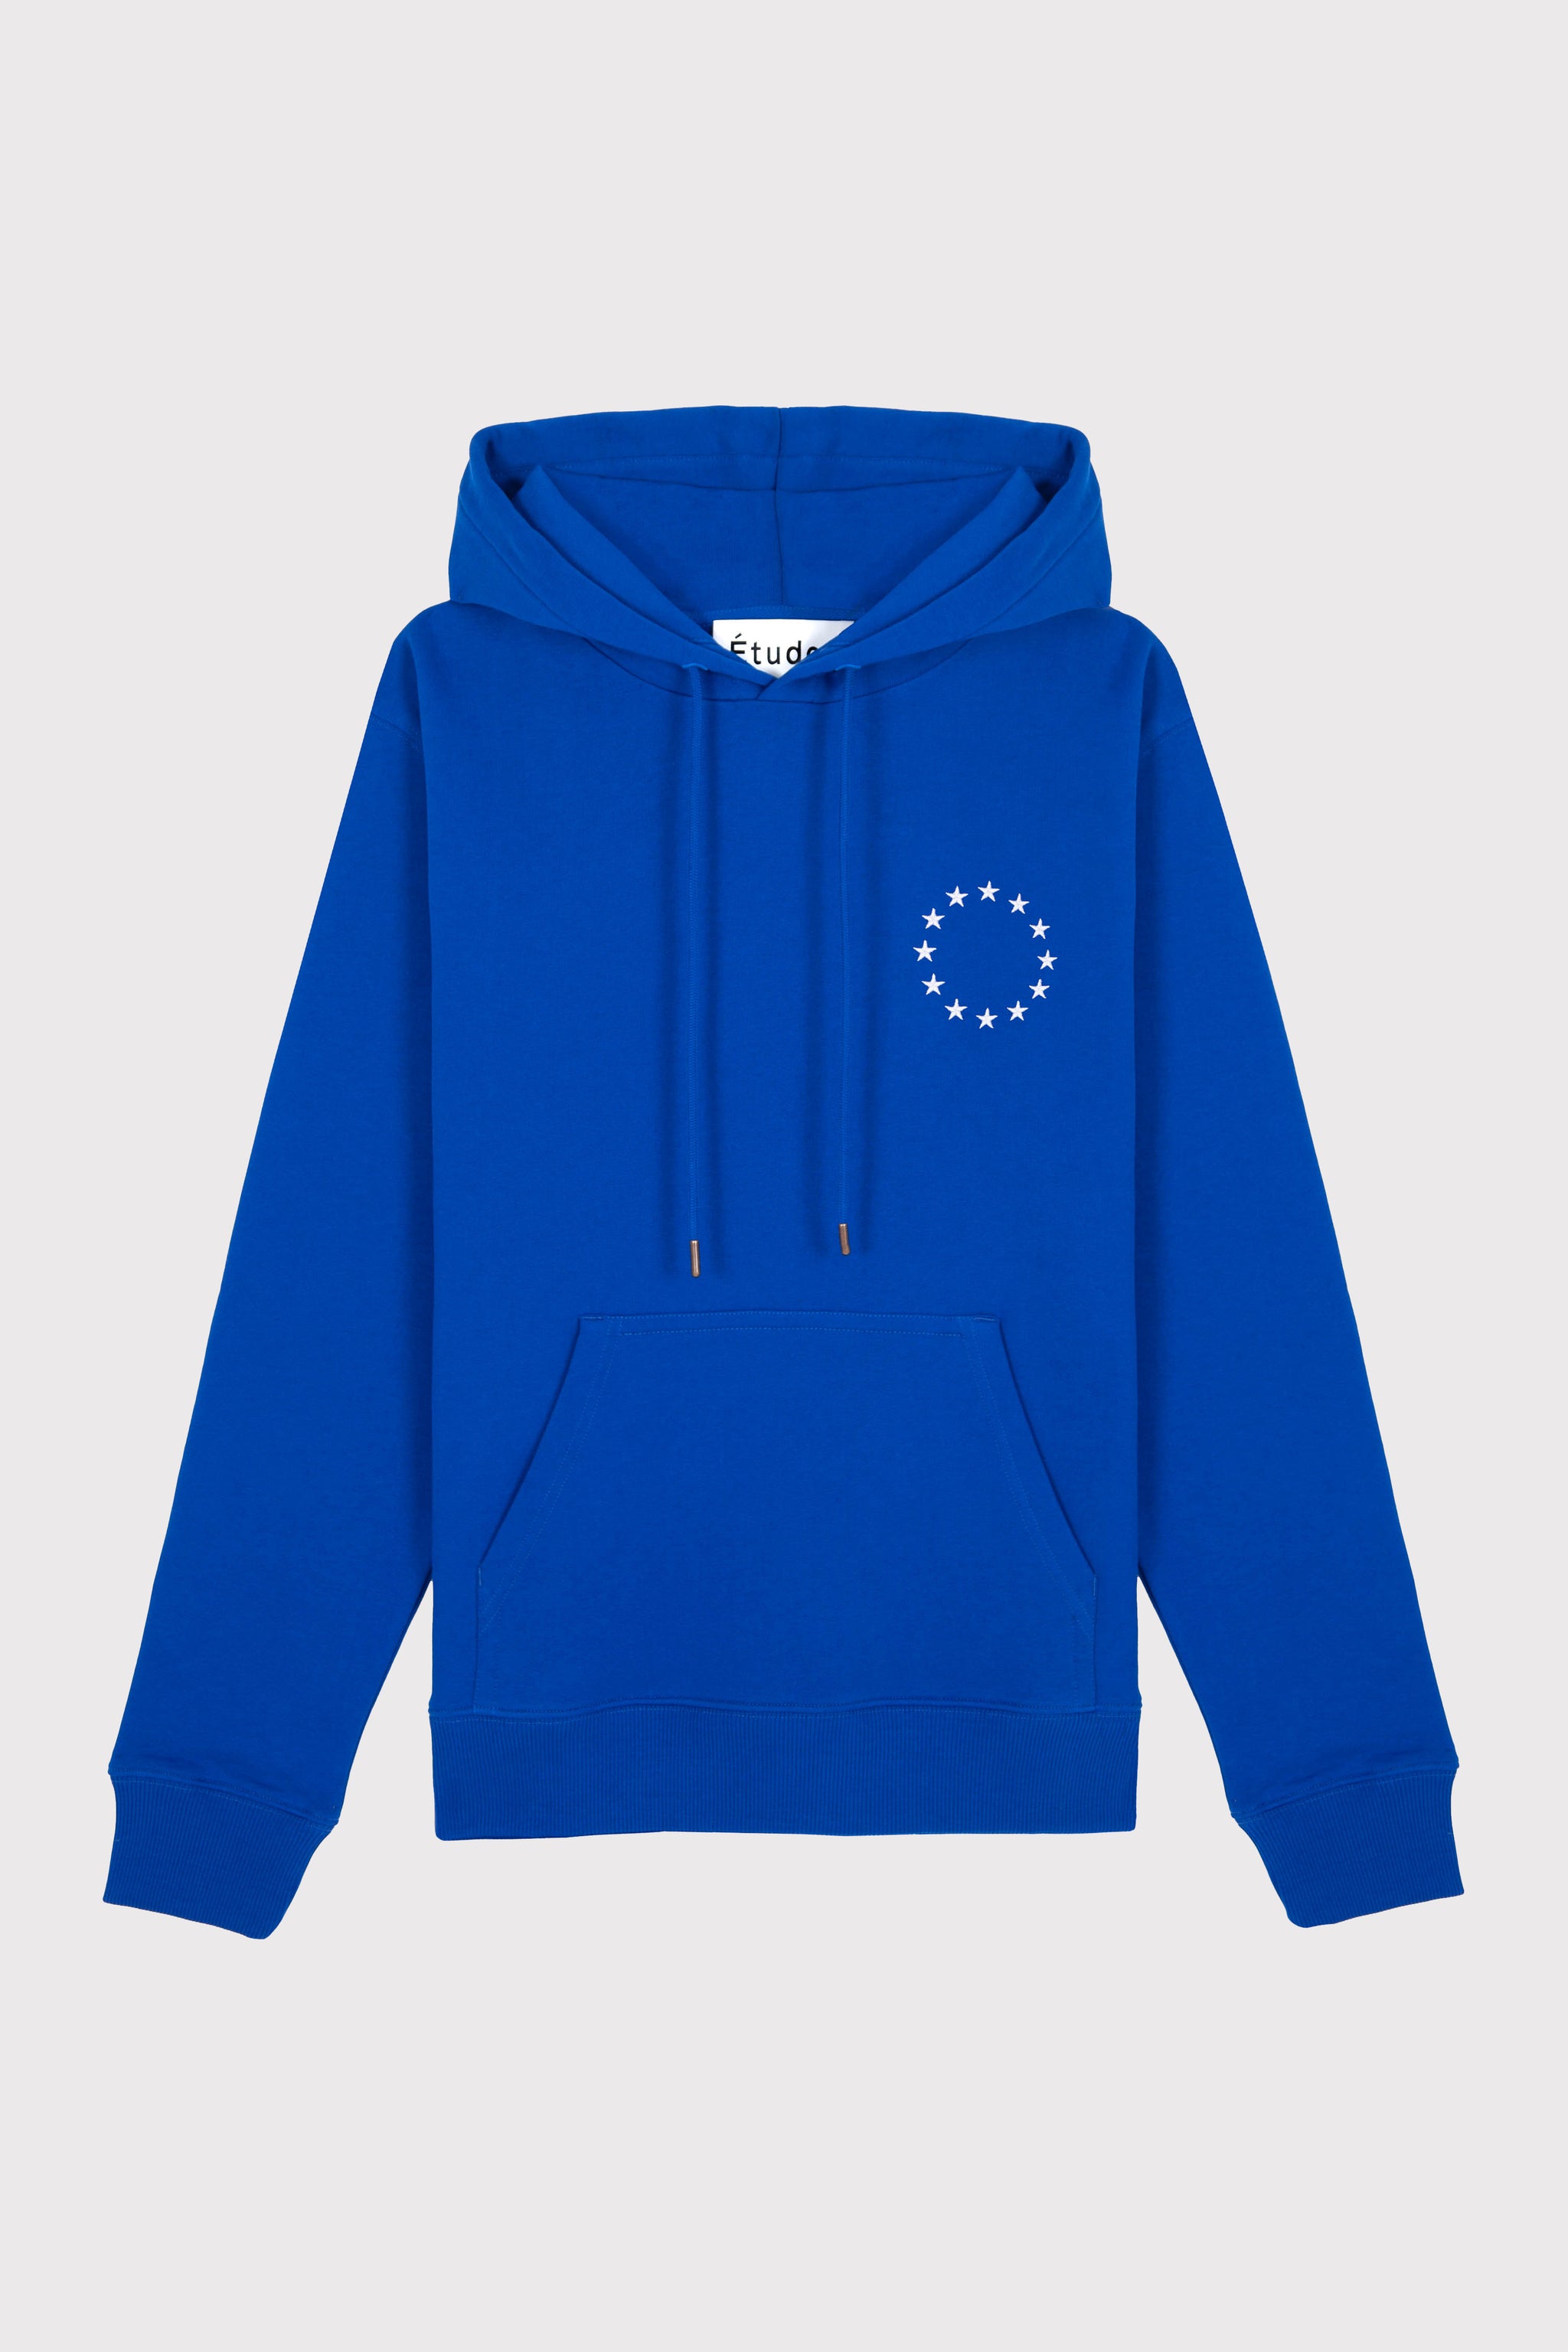 Études KLEIN EUROPA BLUE Sweatshirt 2